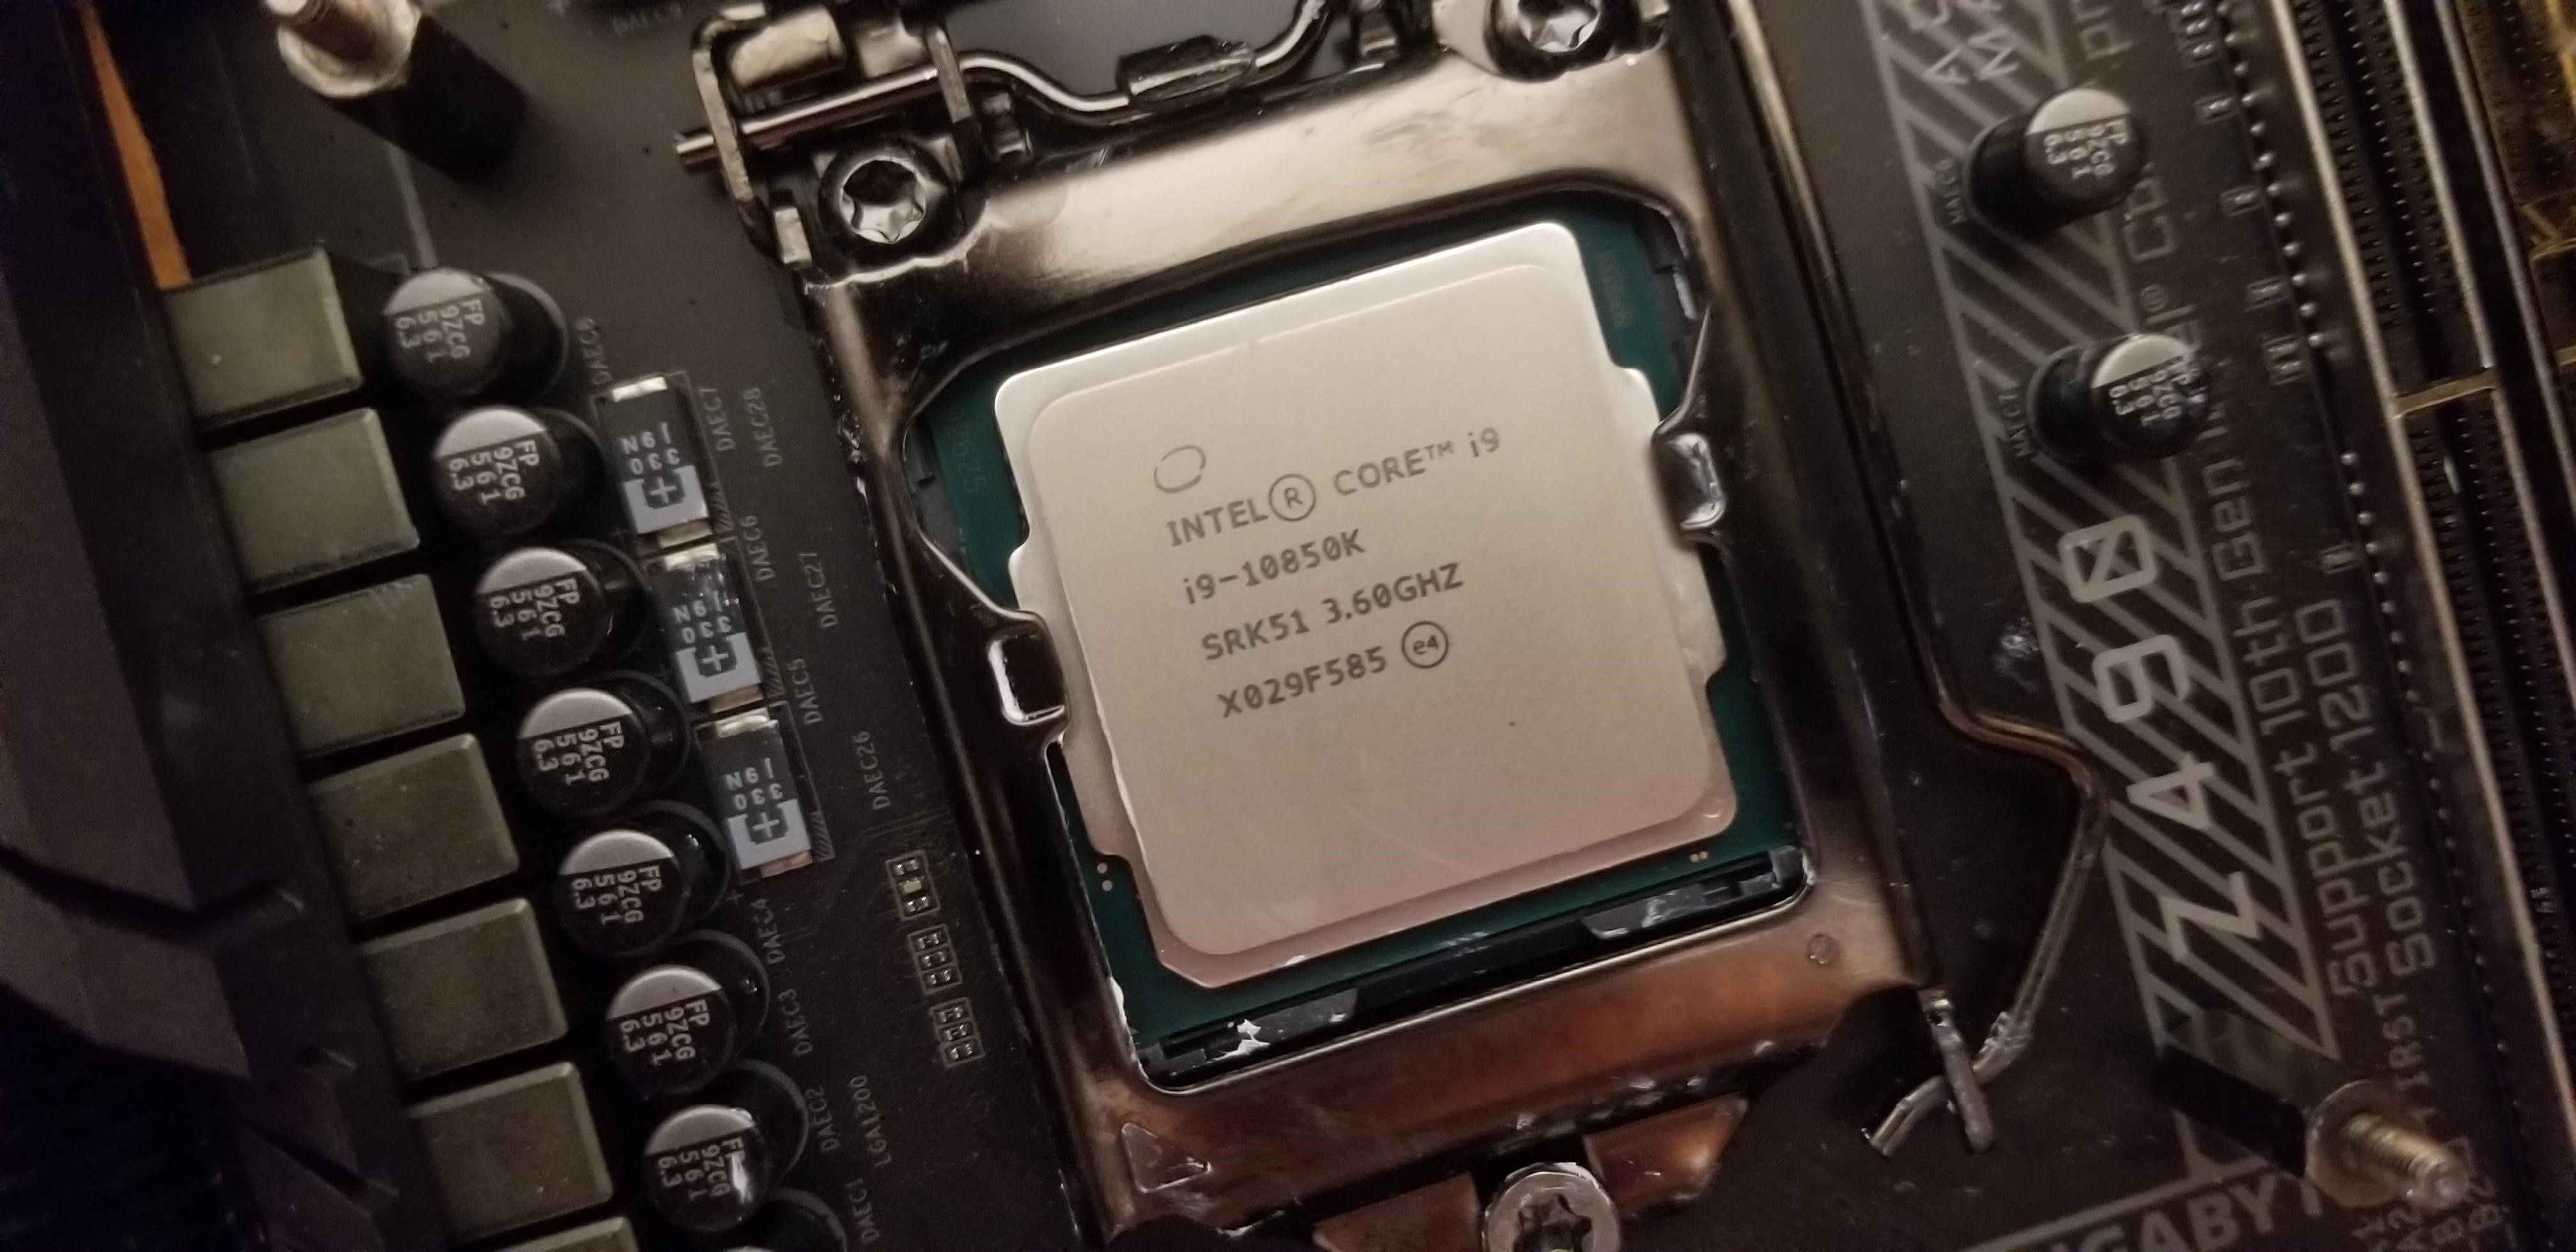 Intel Core i9-10850K CPU Review: Cheaper, but Nearly Identical